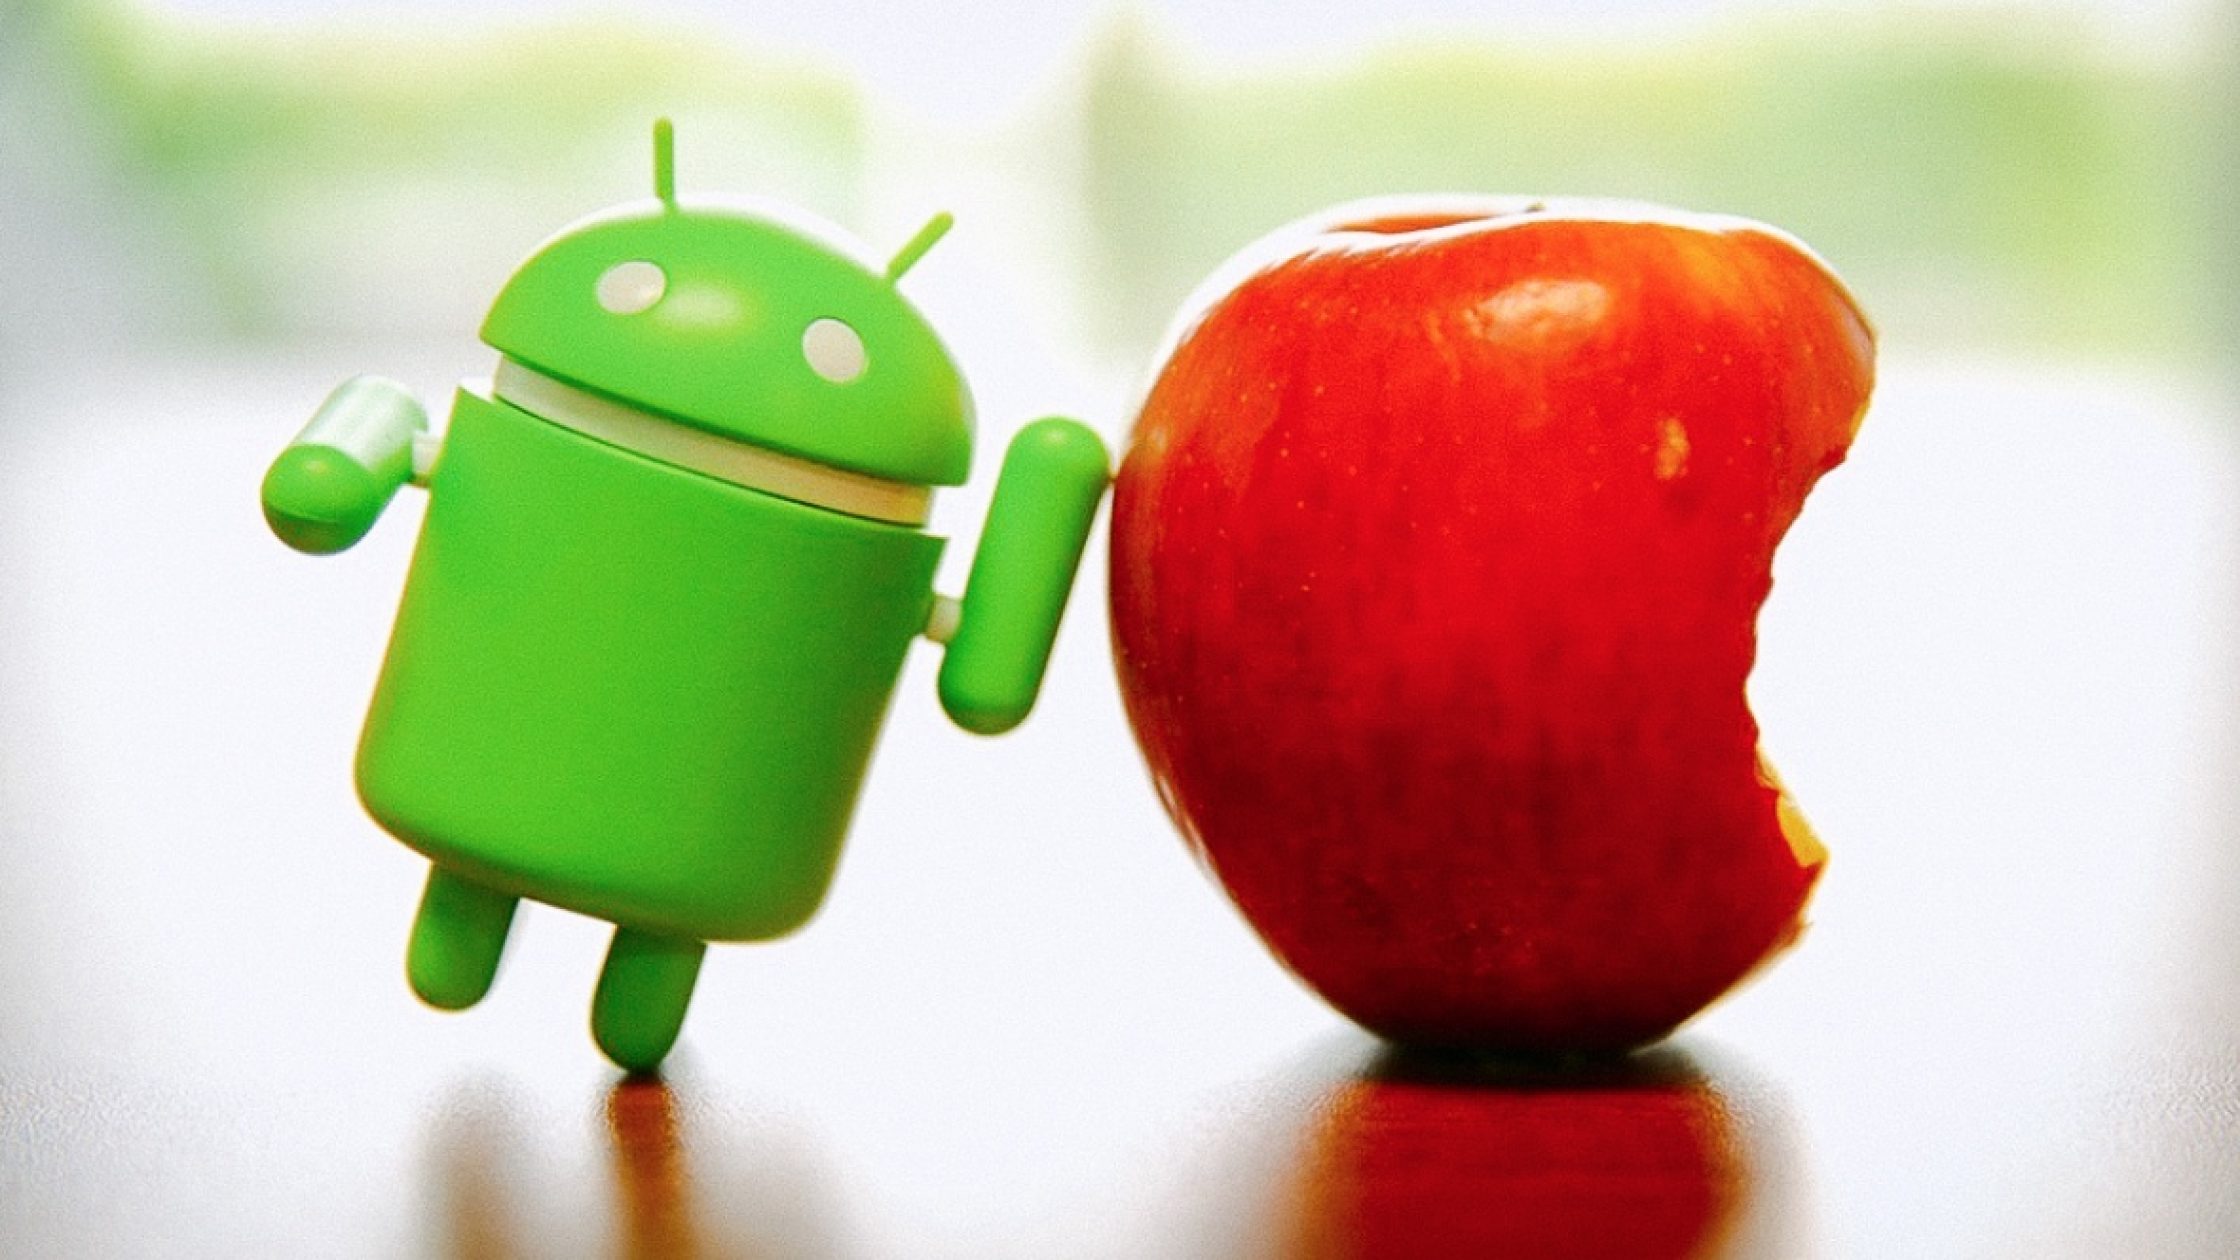 IOS ou Android ?